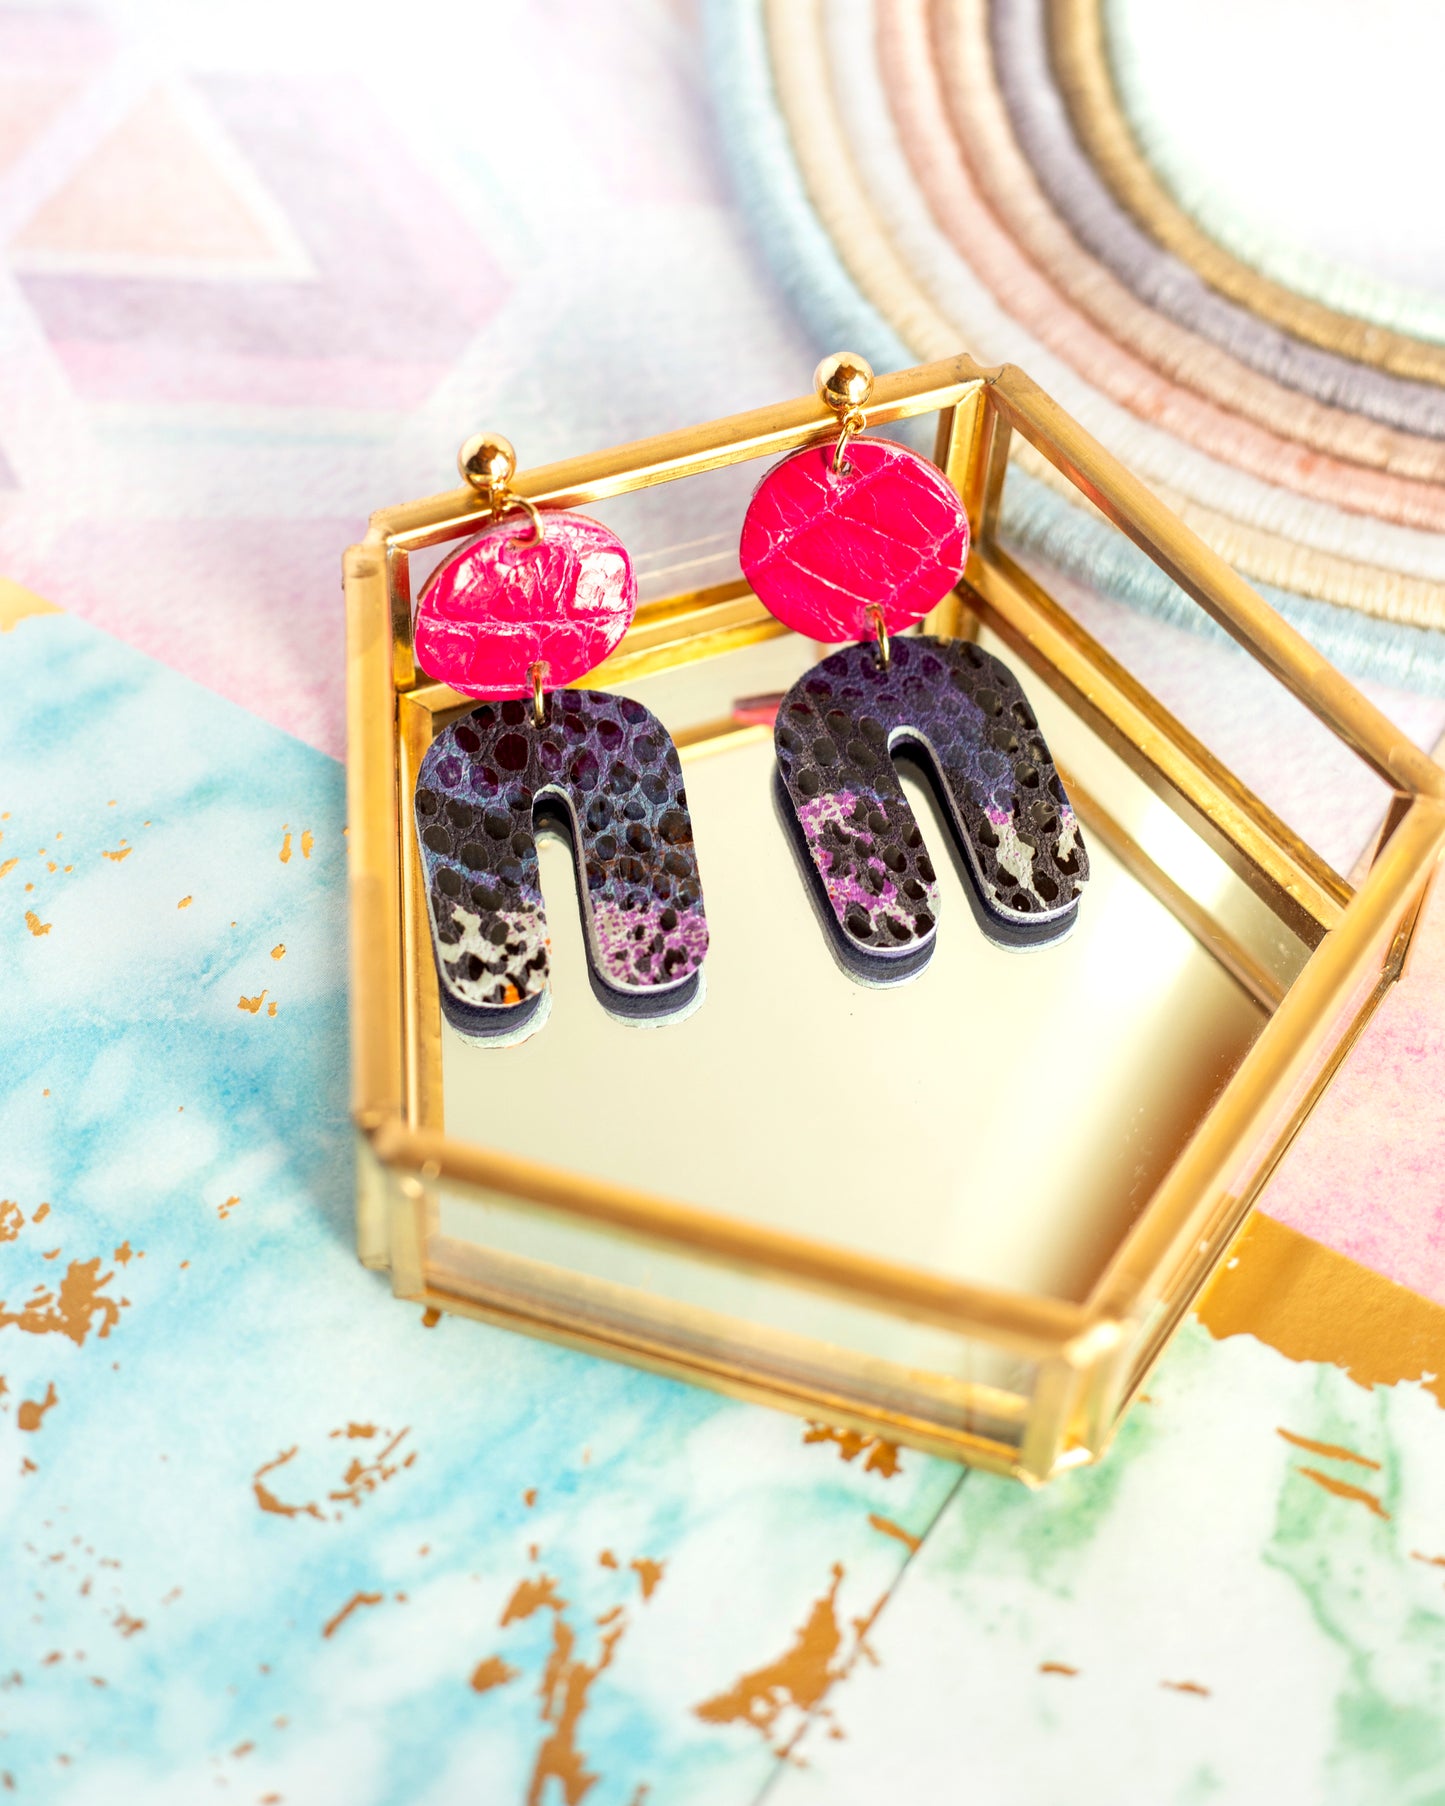 Salomé-Ohrringe aus fuchsiafarbenem und lilafarbenem Leder